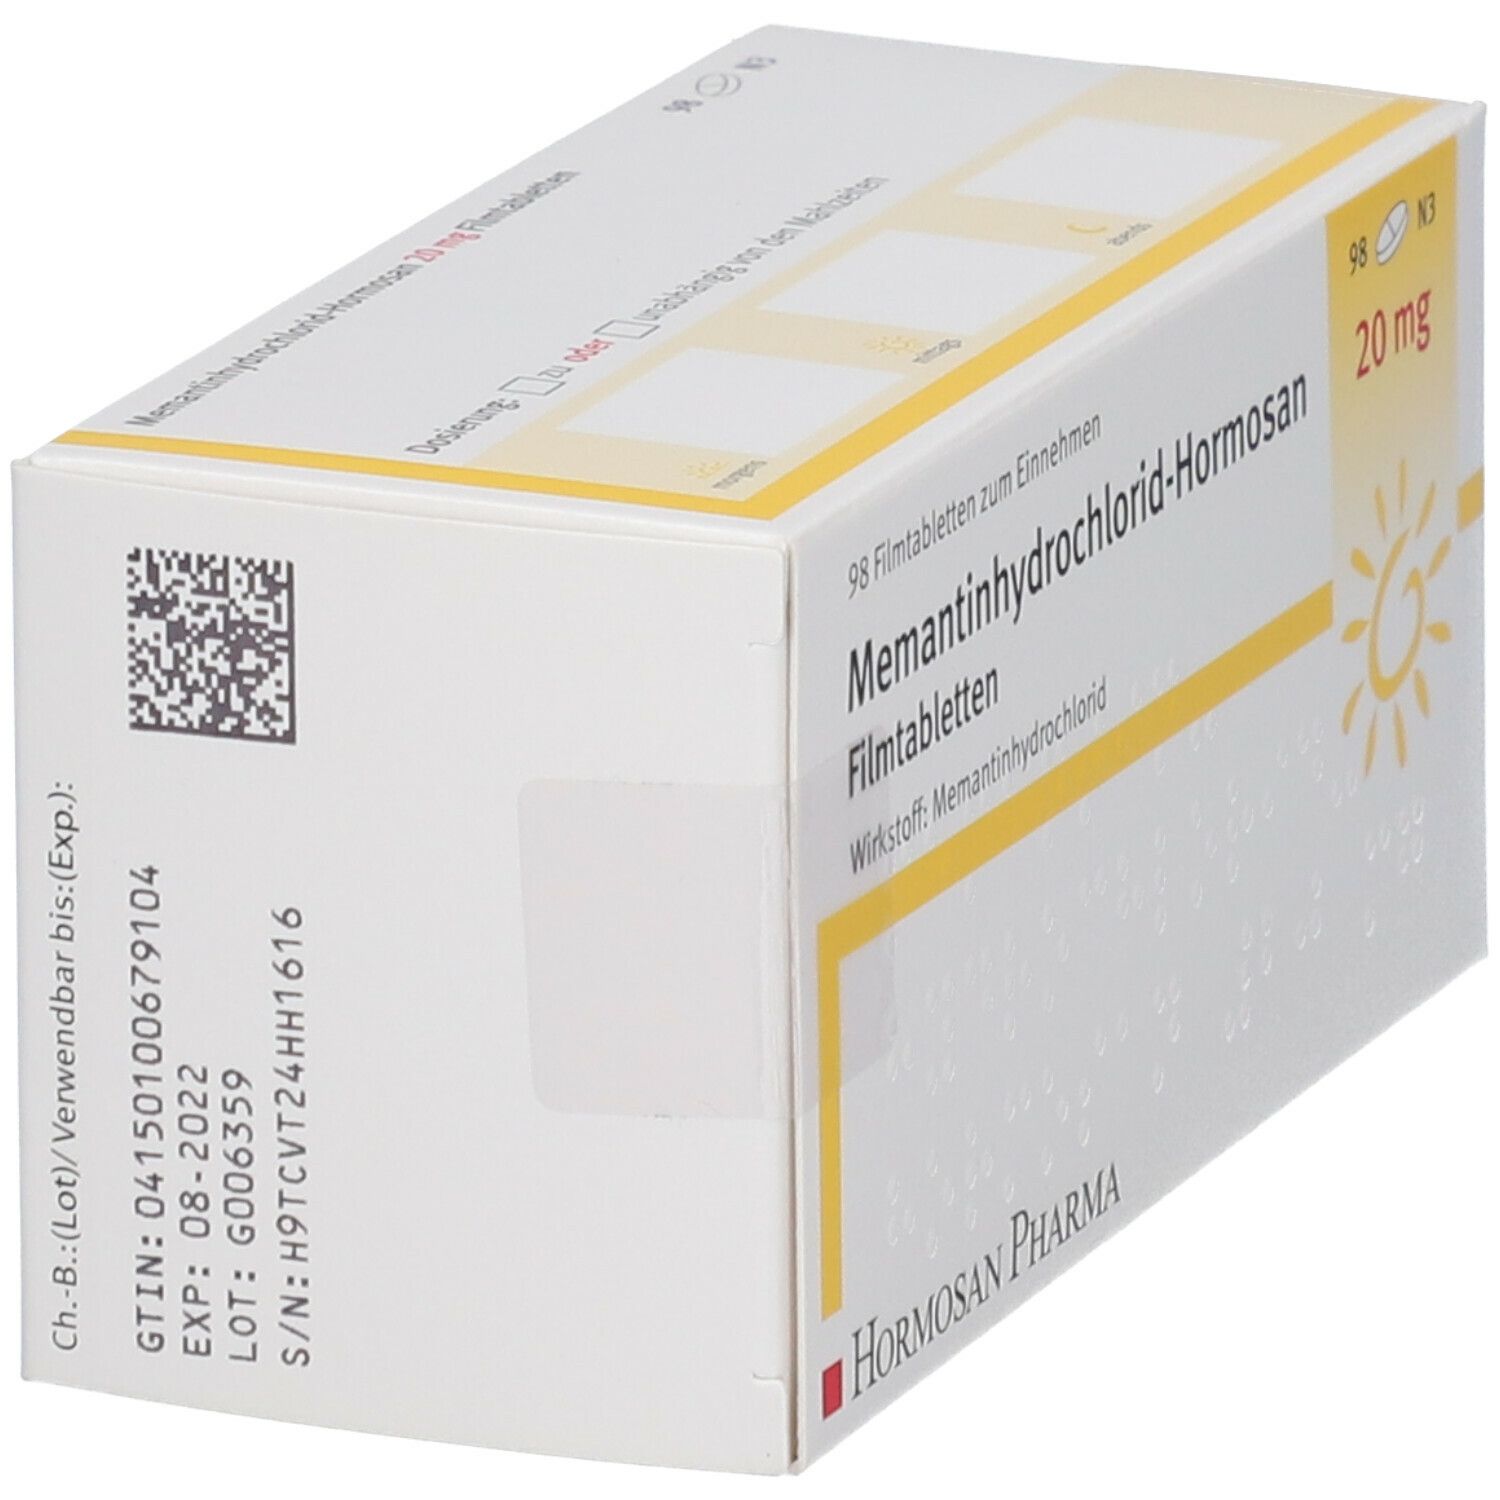 Memantinhydrochlorid-Hormosan 20 mg